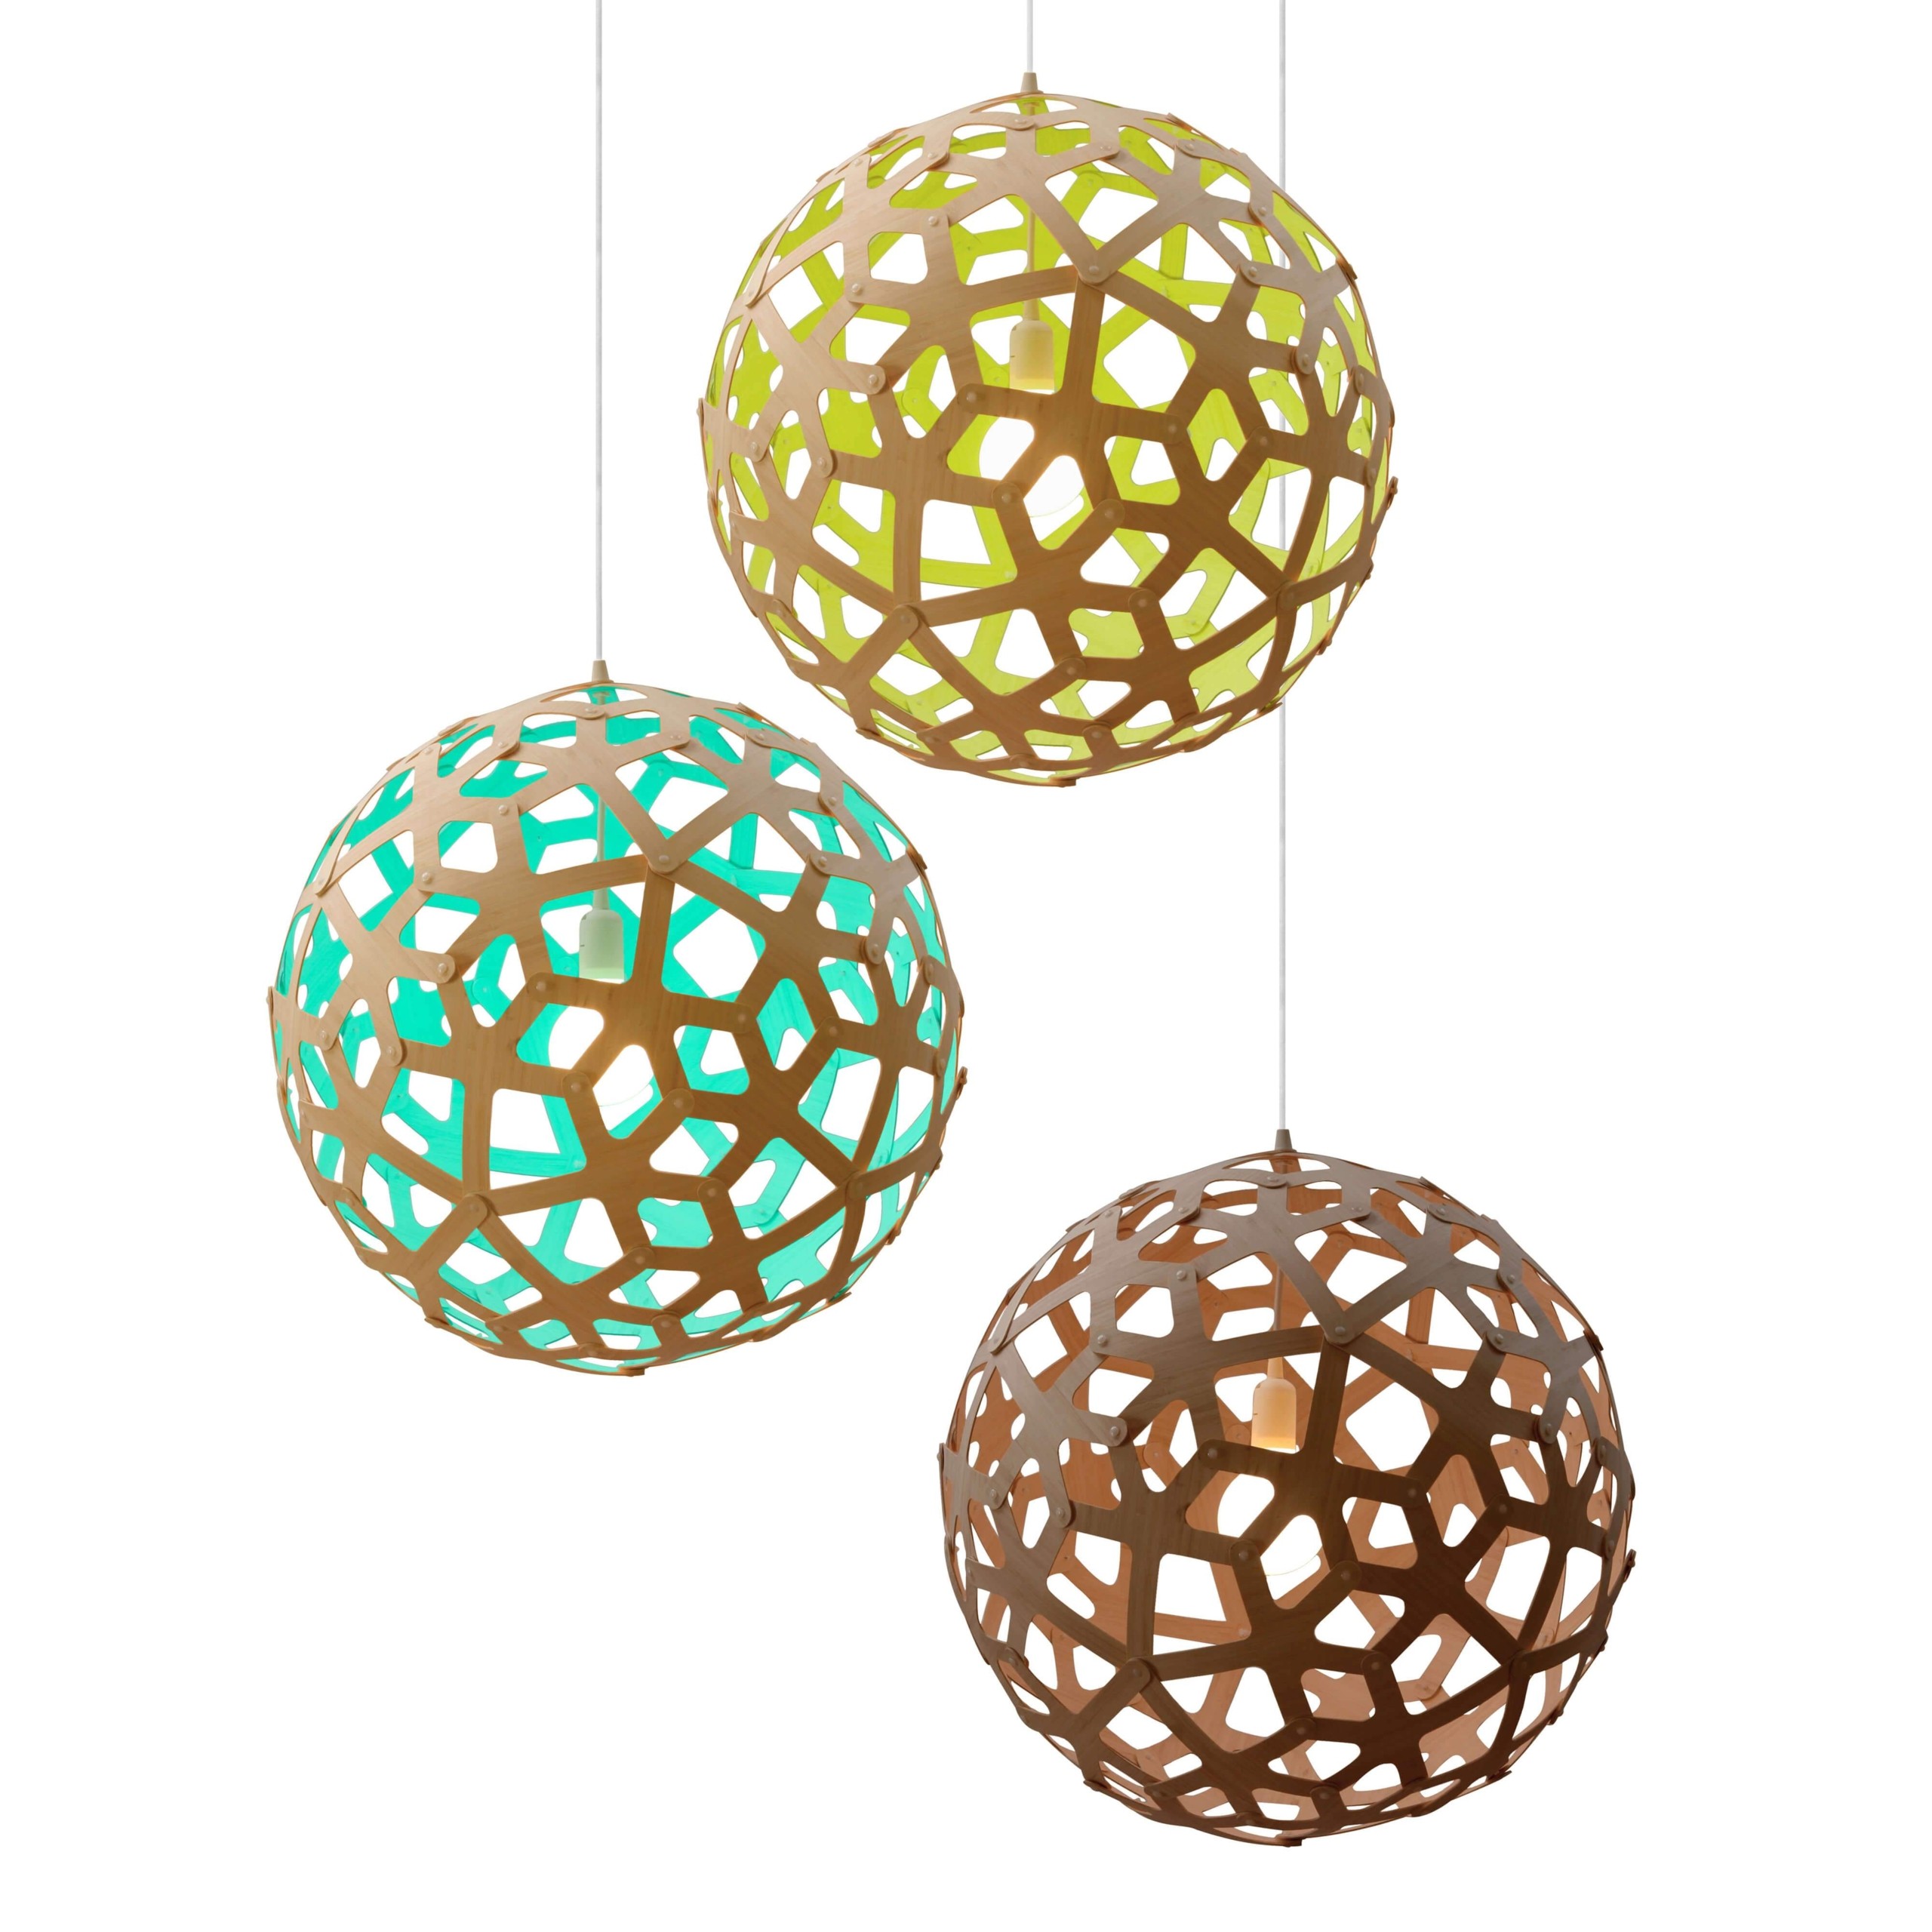 Modern bamboo coral globe ceiling light pendant lamp fixture lighting